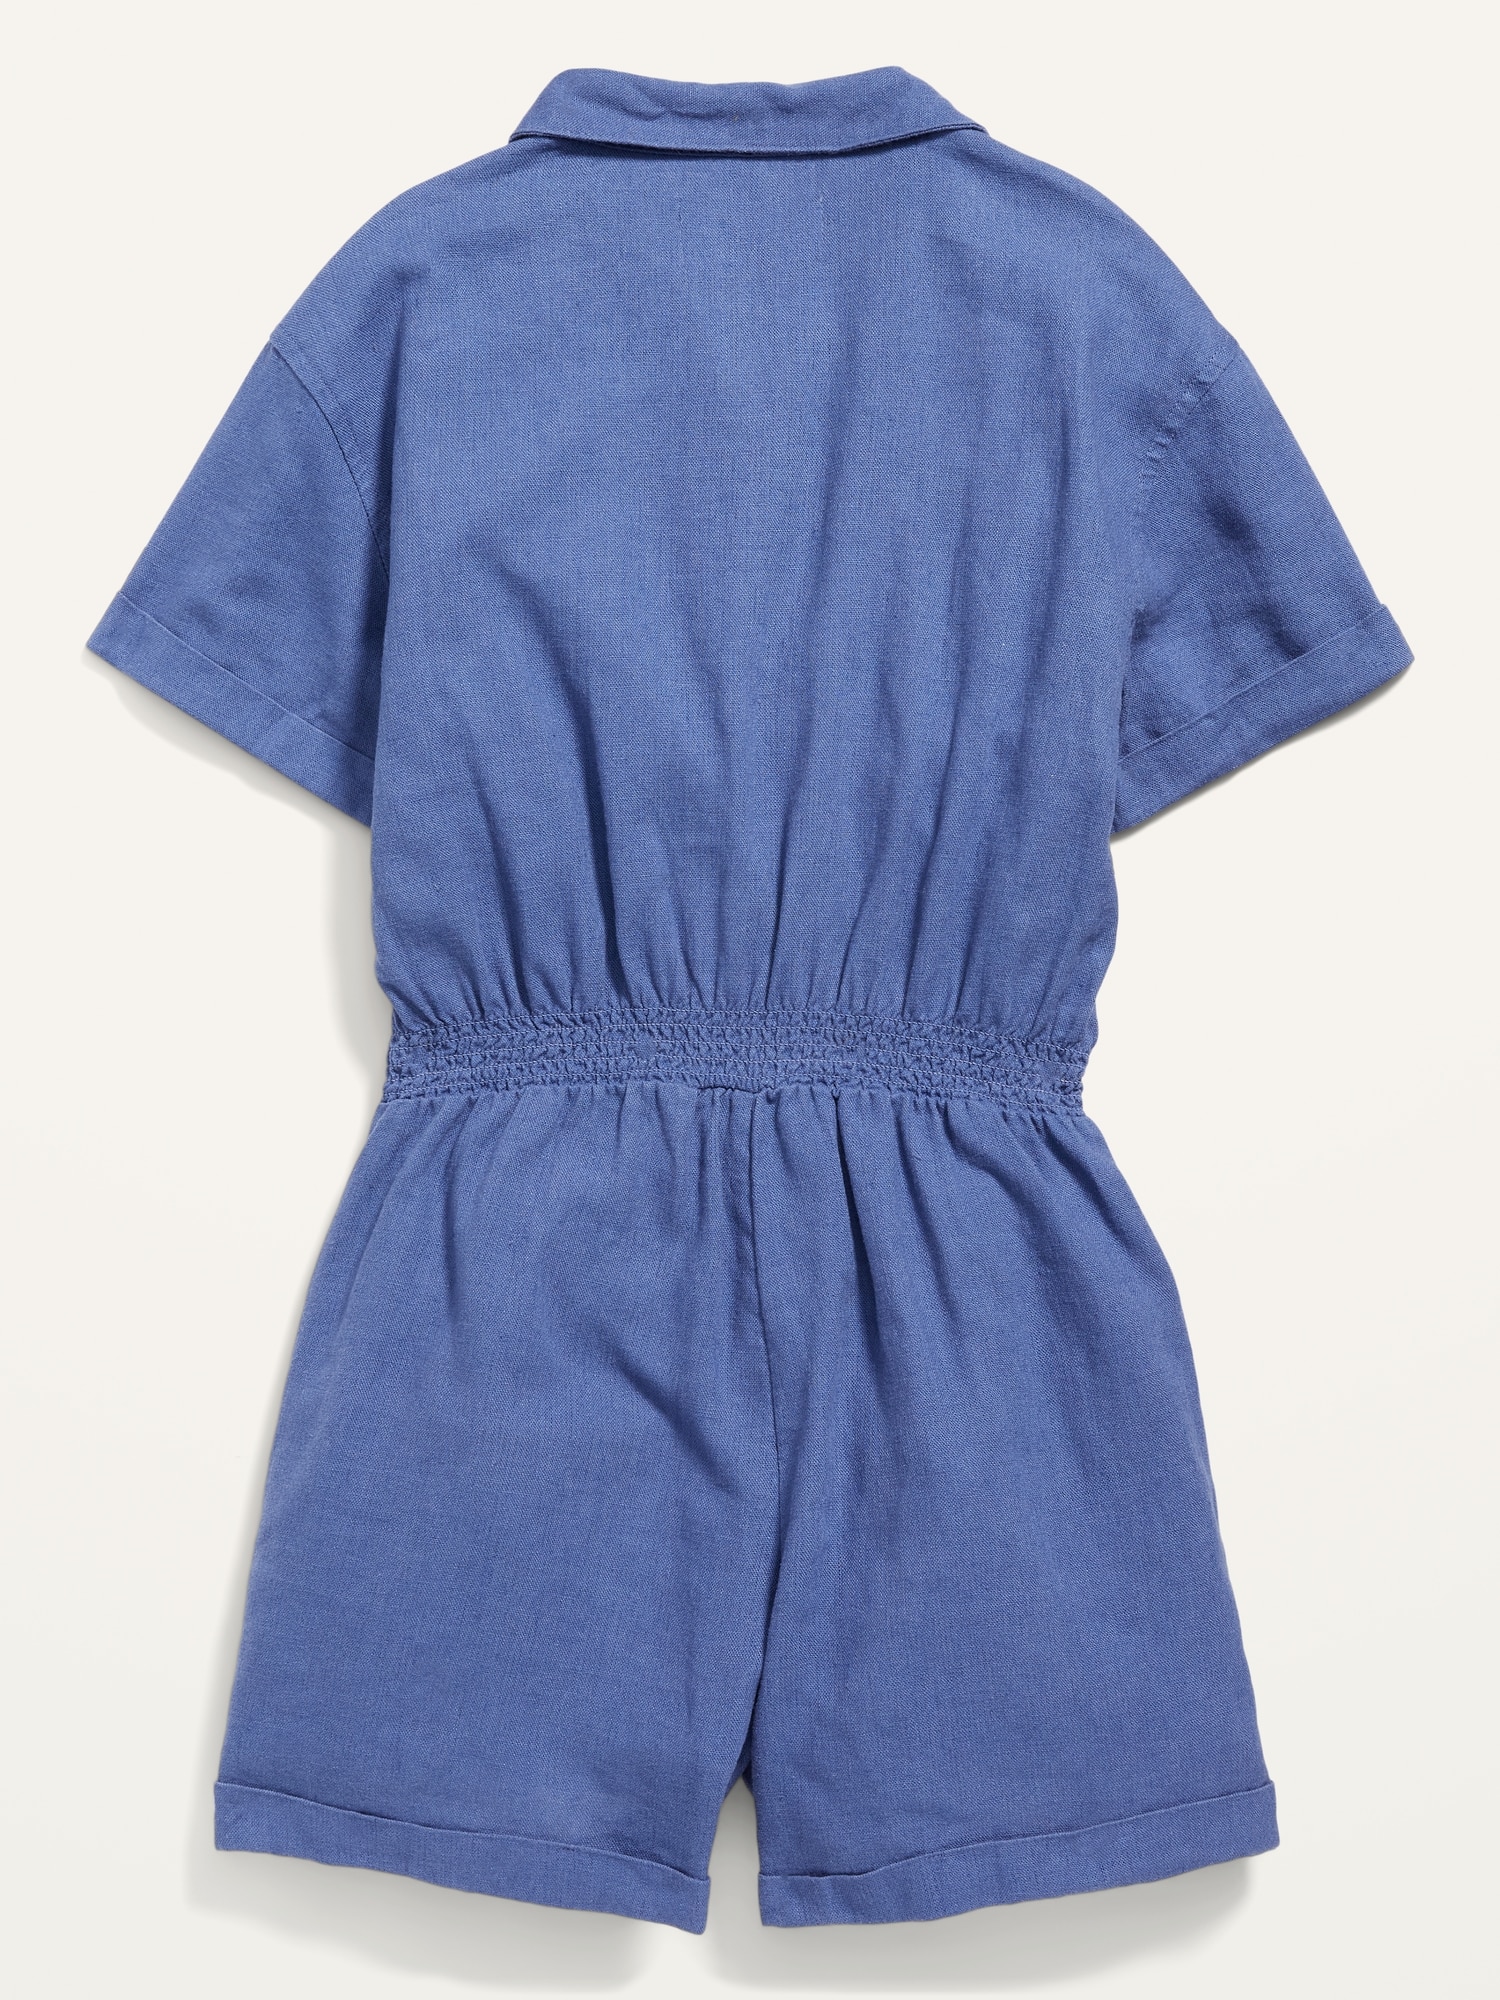 Petite Blue Short Sleeve Knitted Romper